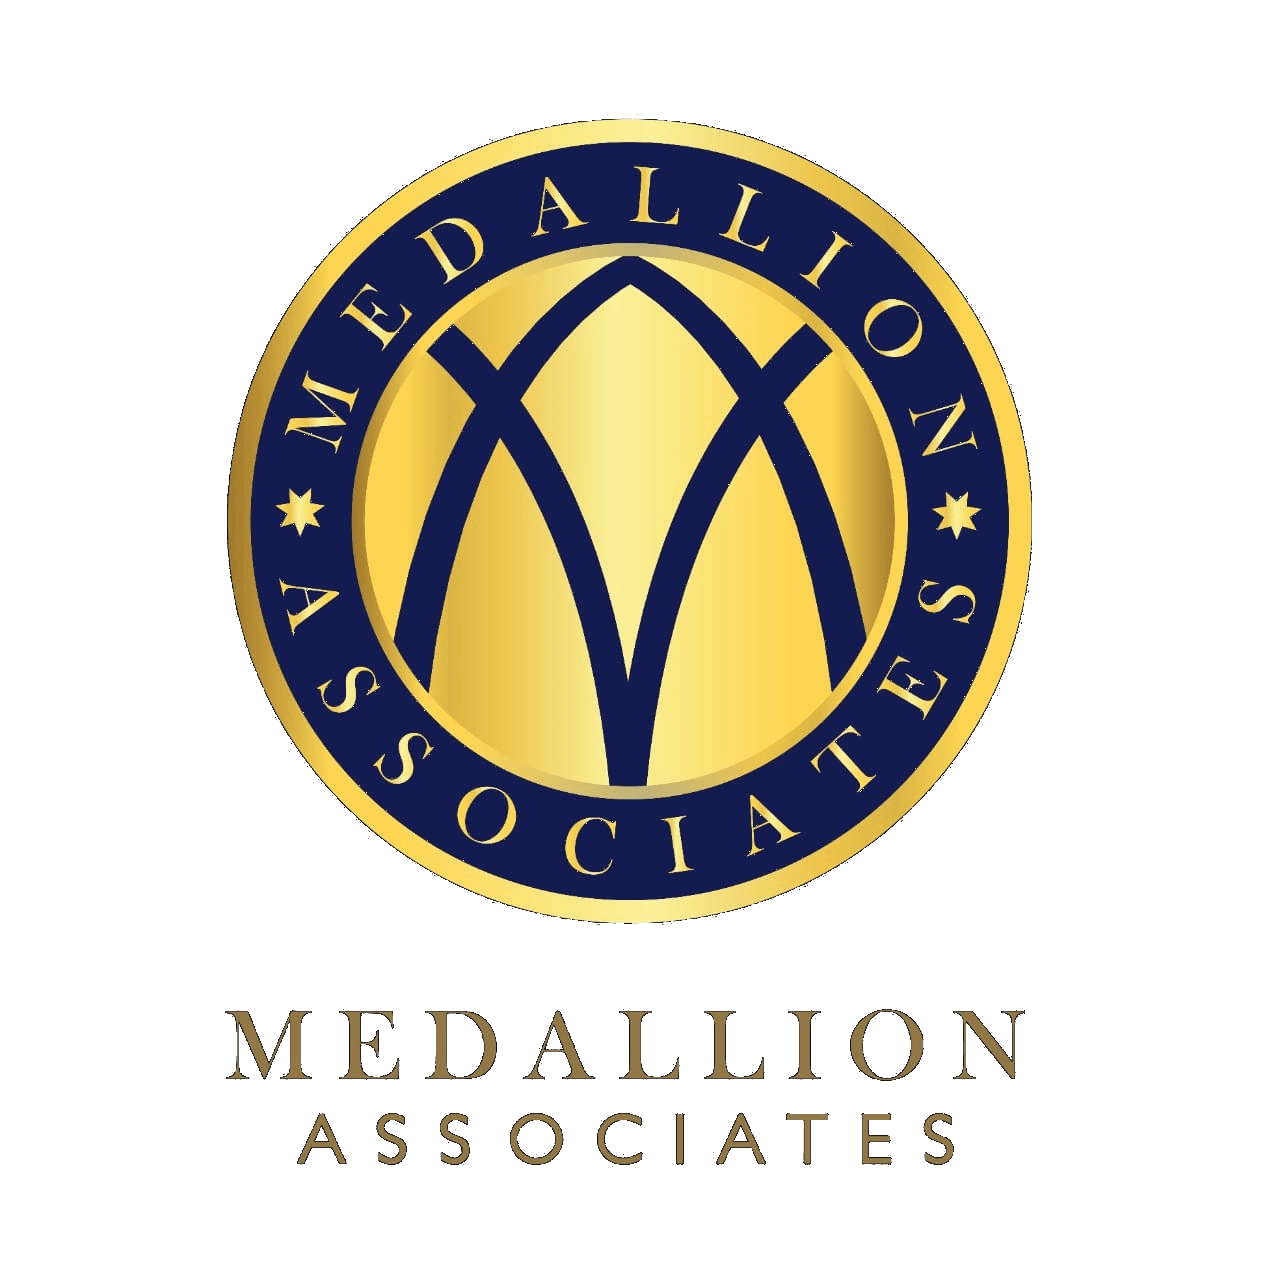 Medallion Associates